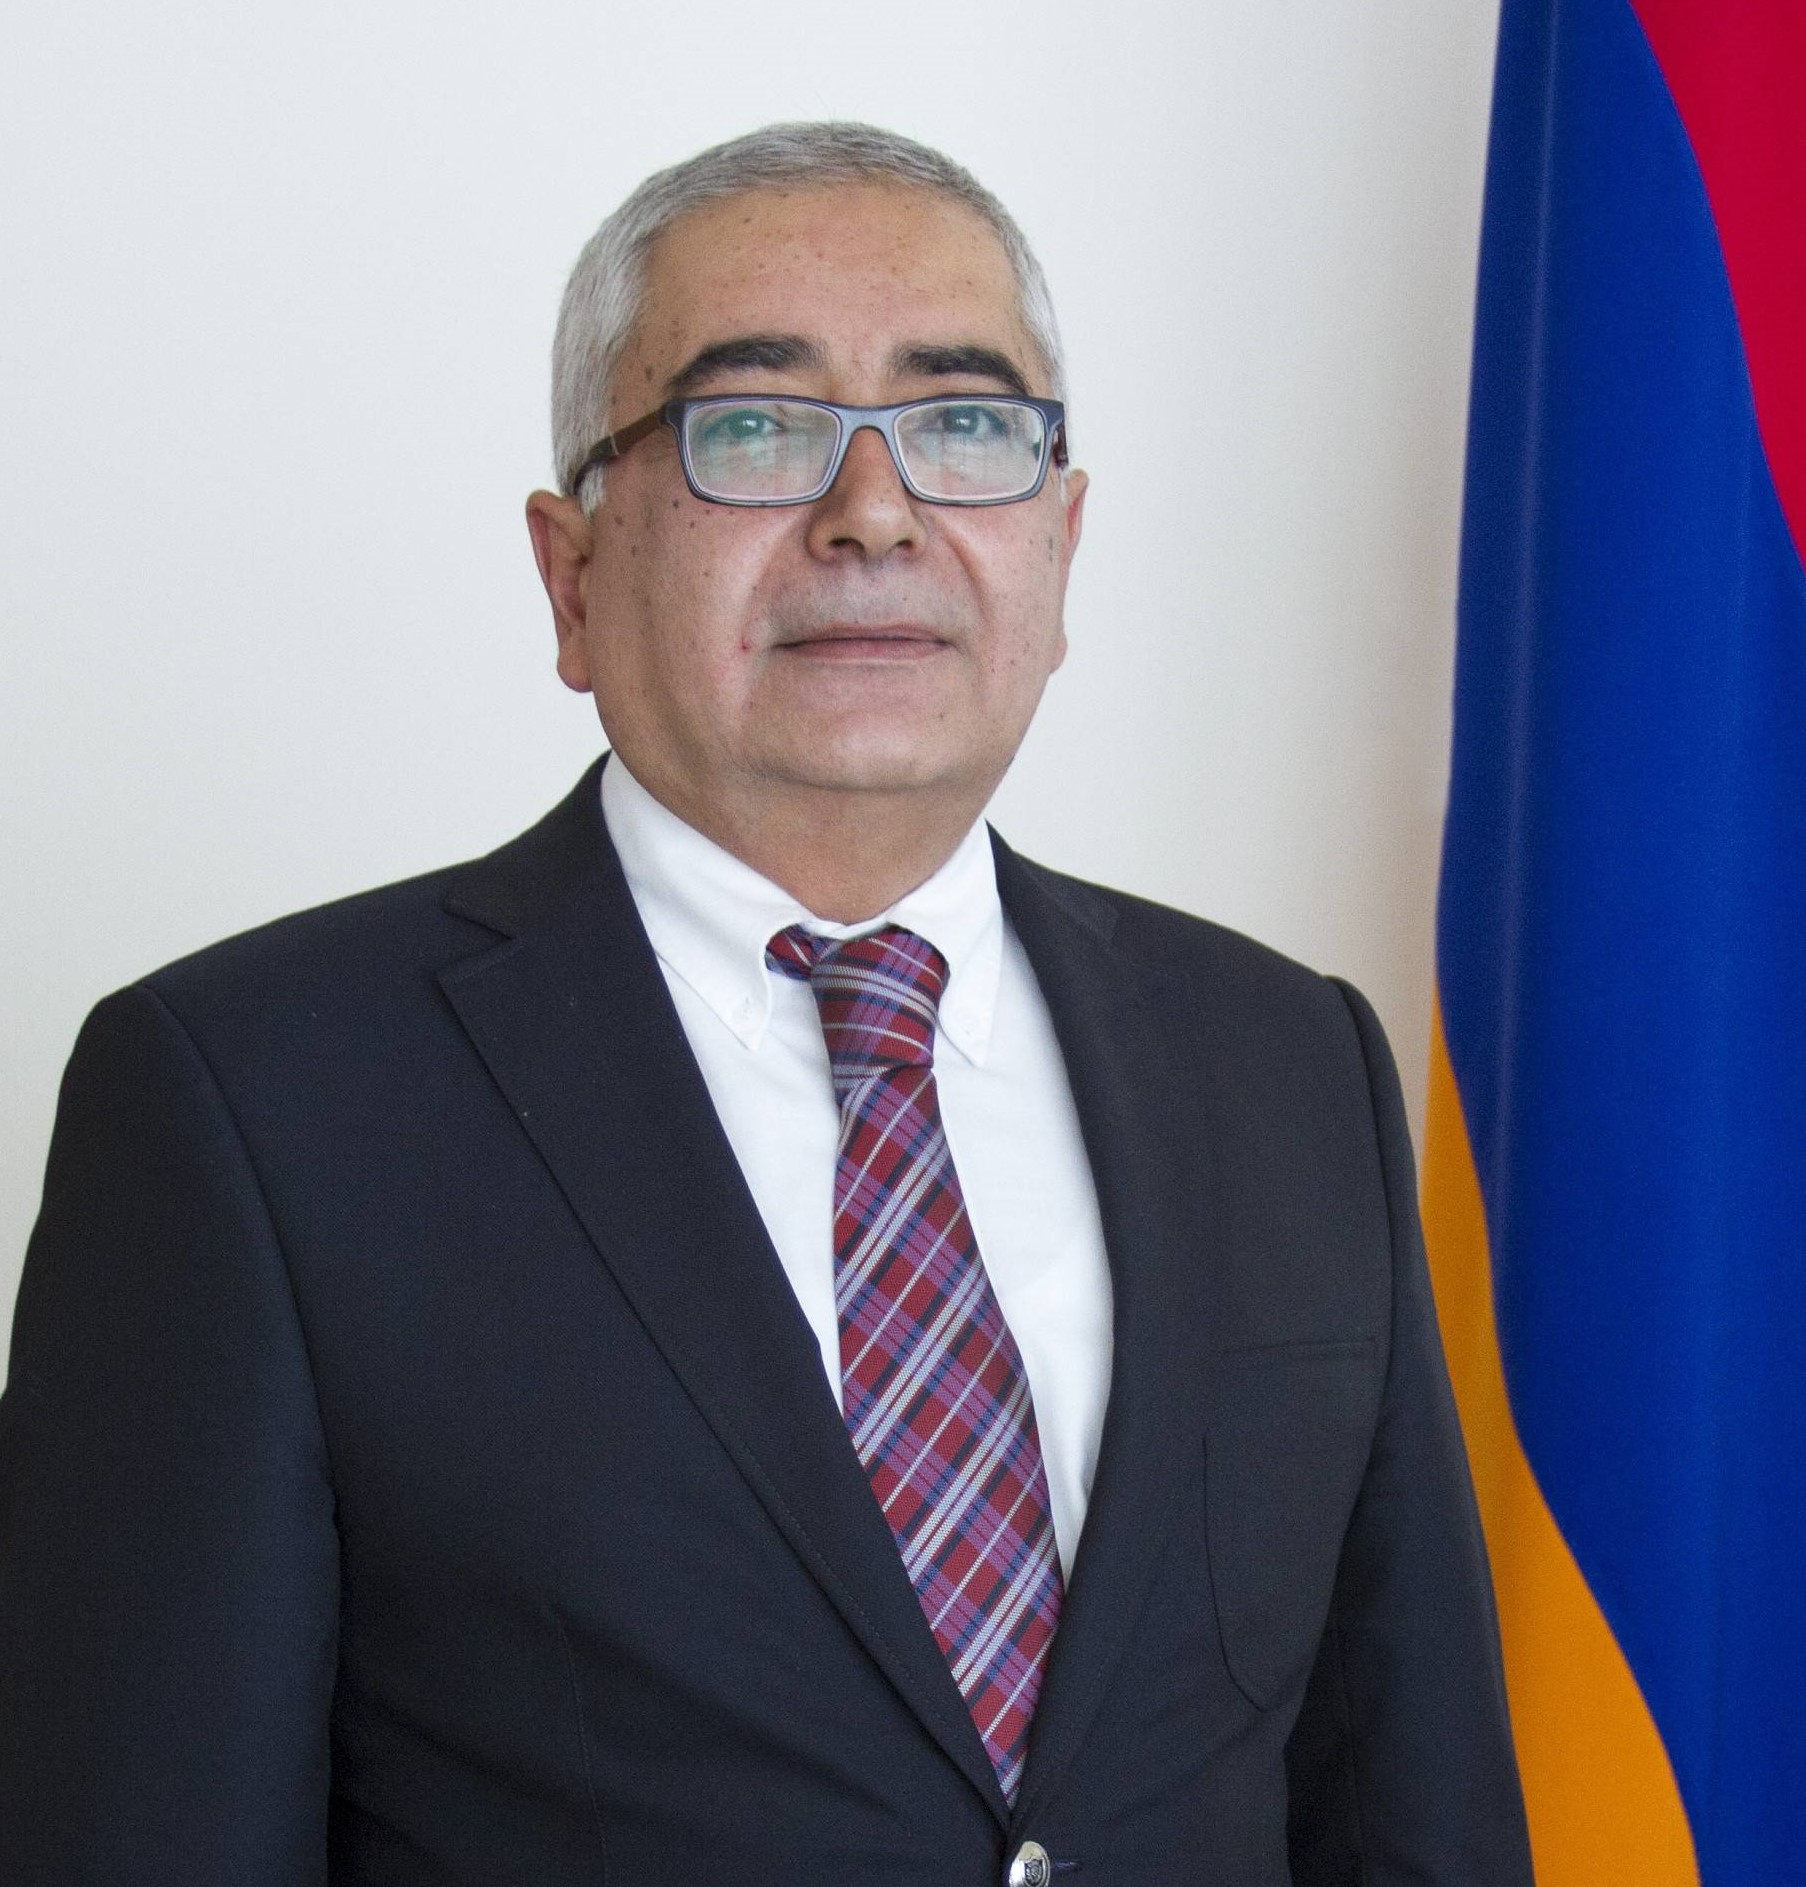 Ambassador S.Baghsararian